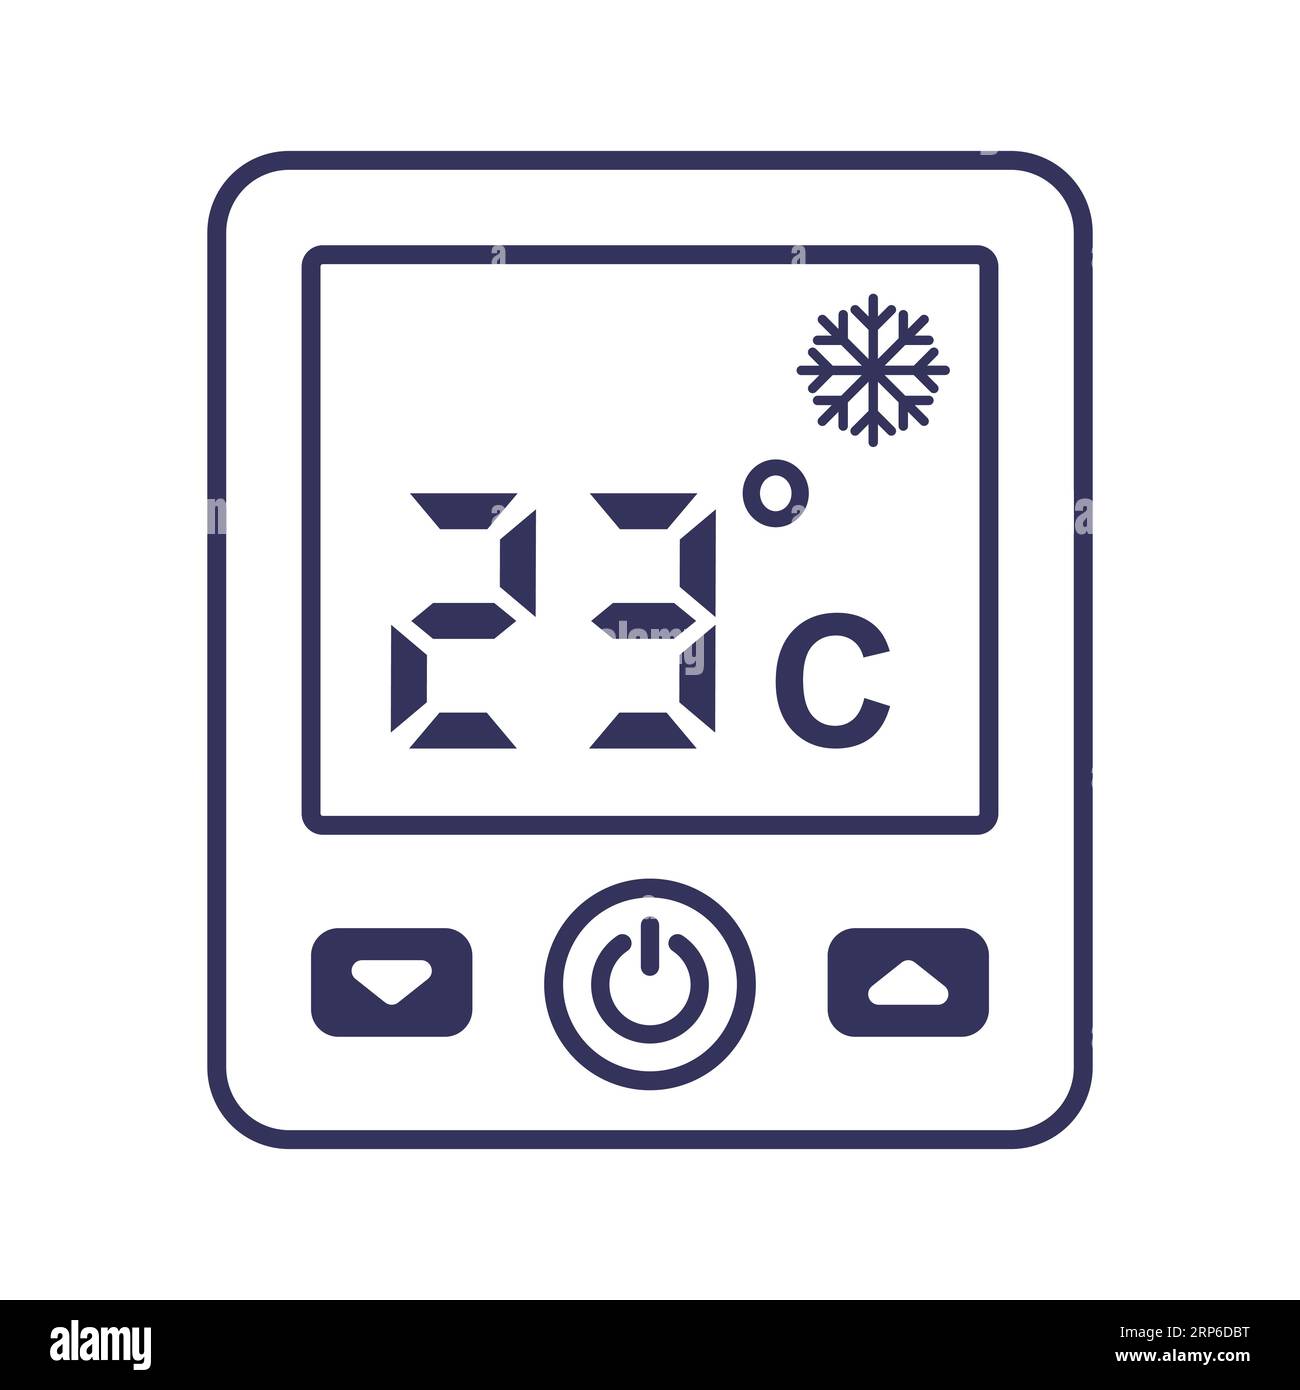 Ays Digital Temperaturregler, Heizung Kühlung Thermostat Steckdose